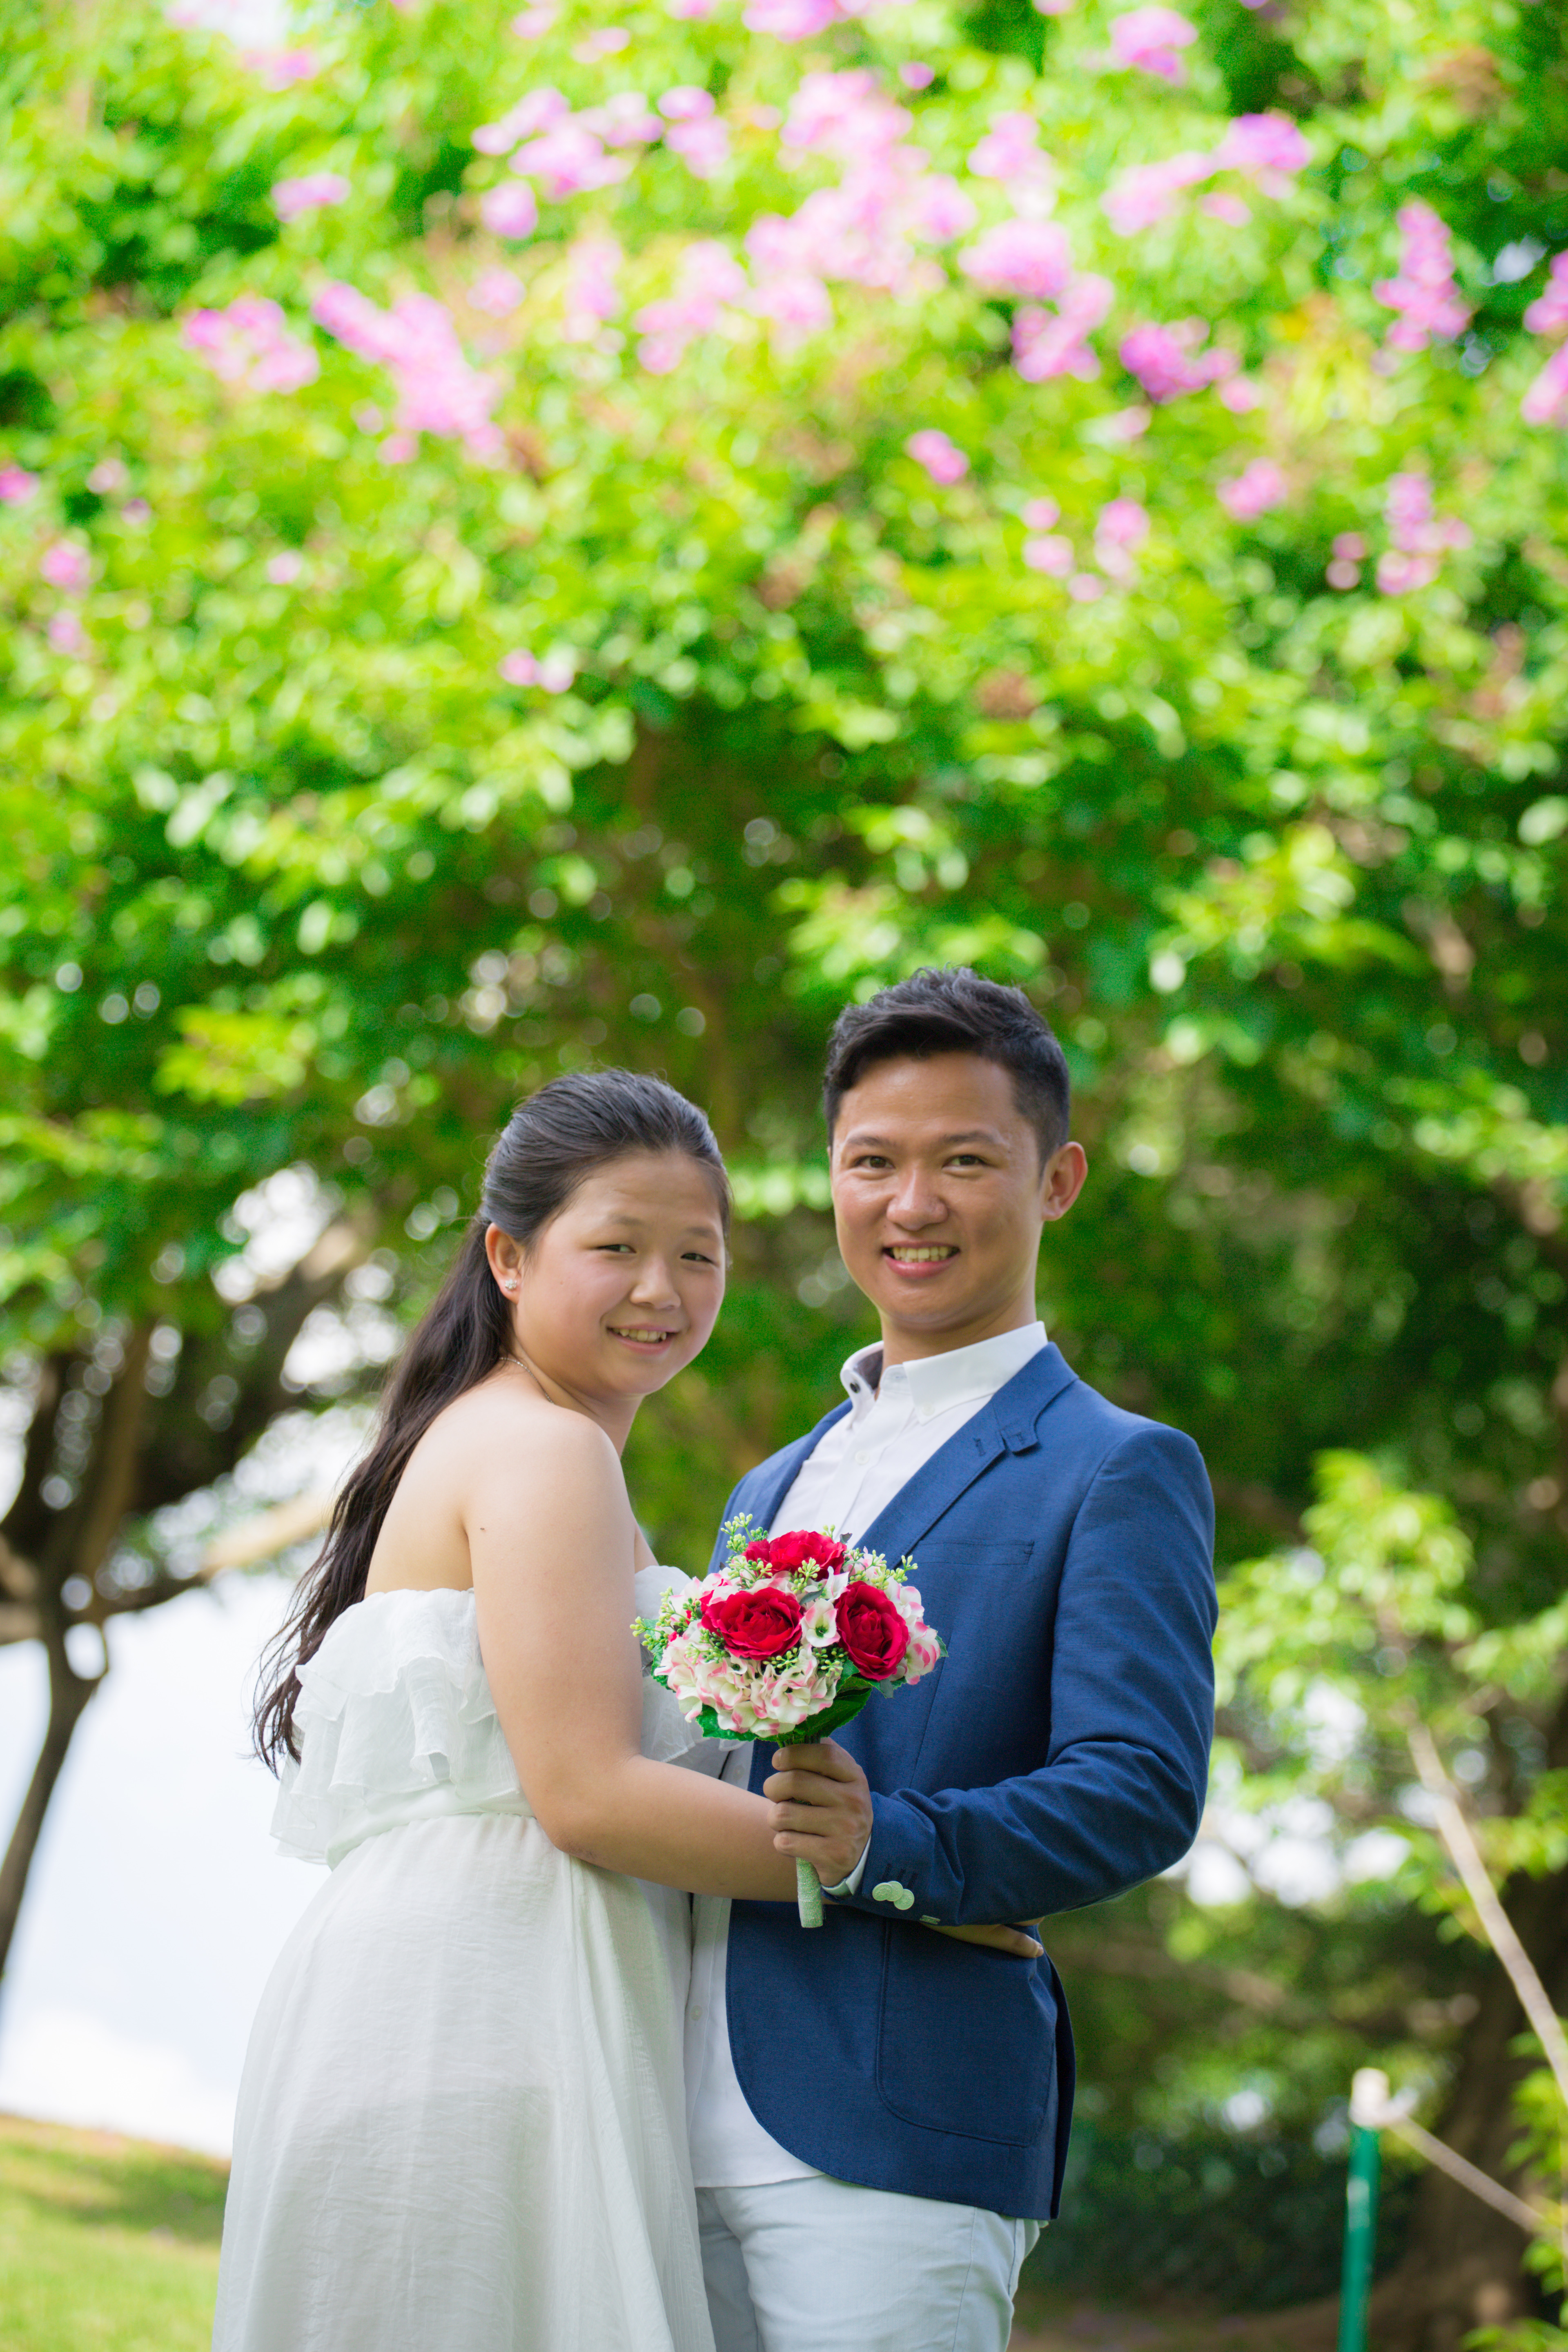 Andy Chau 攝影師工作紀錄: 婚紗攝影 Local Prewedding Photography